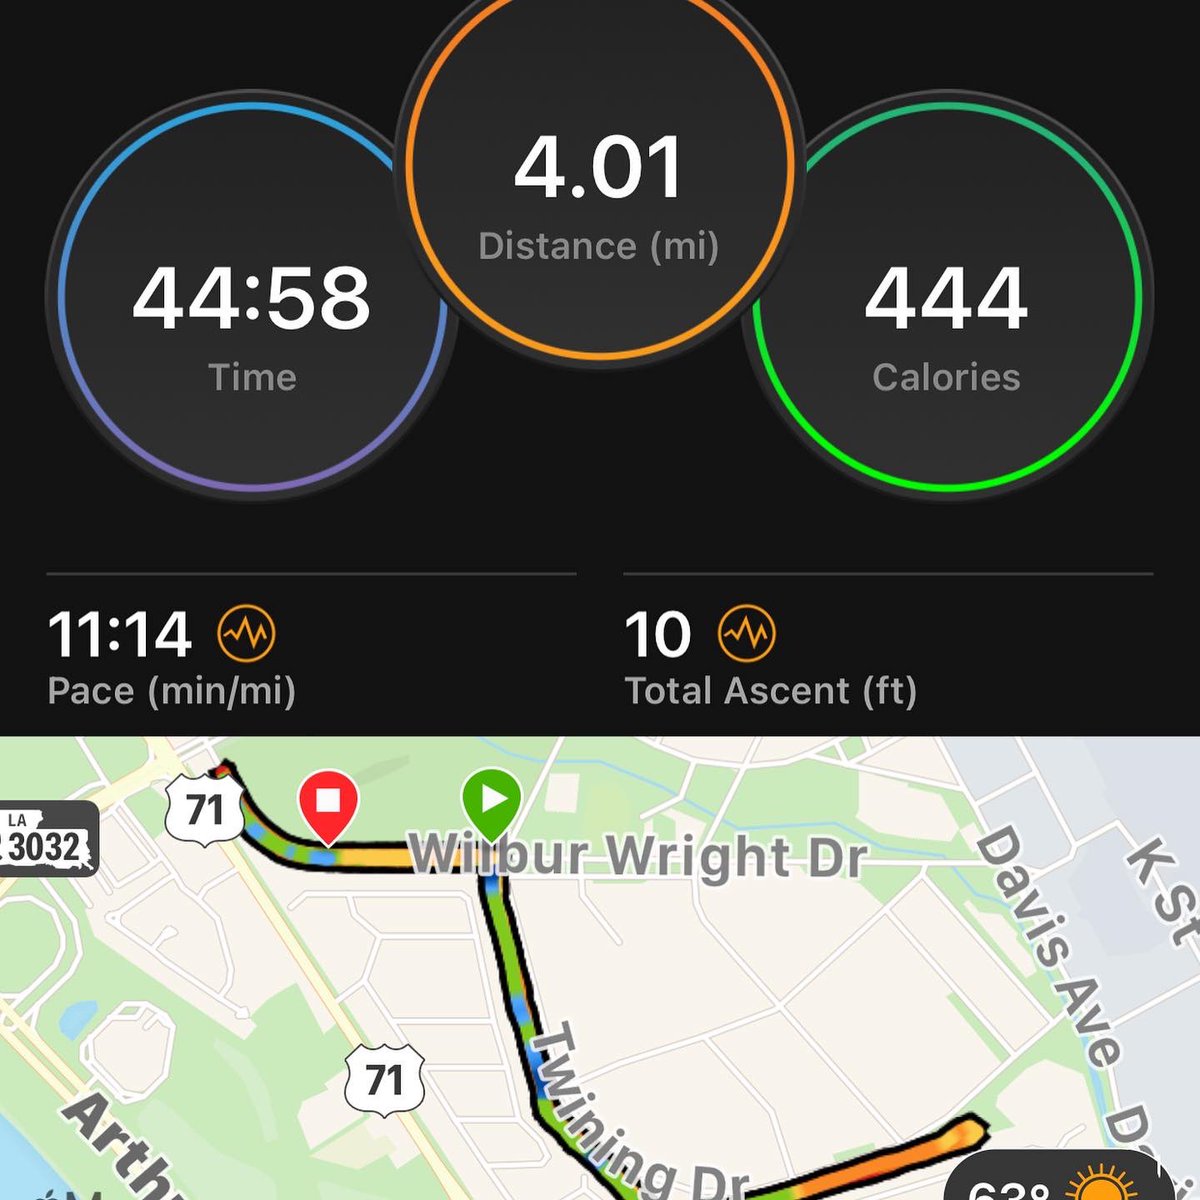 4 miles training run completed 
#finishedwithaheartbeat  #vetetanssuicideawareness #keepmovingforward #AllGaveSomeAndSomeGaveAll #neverforgotten #HealthyBodyHealthyMind #NeverQuit #running #Garmin #running #stayfit